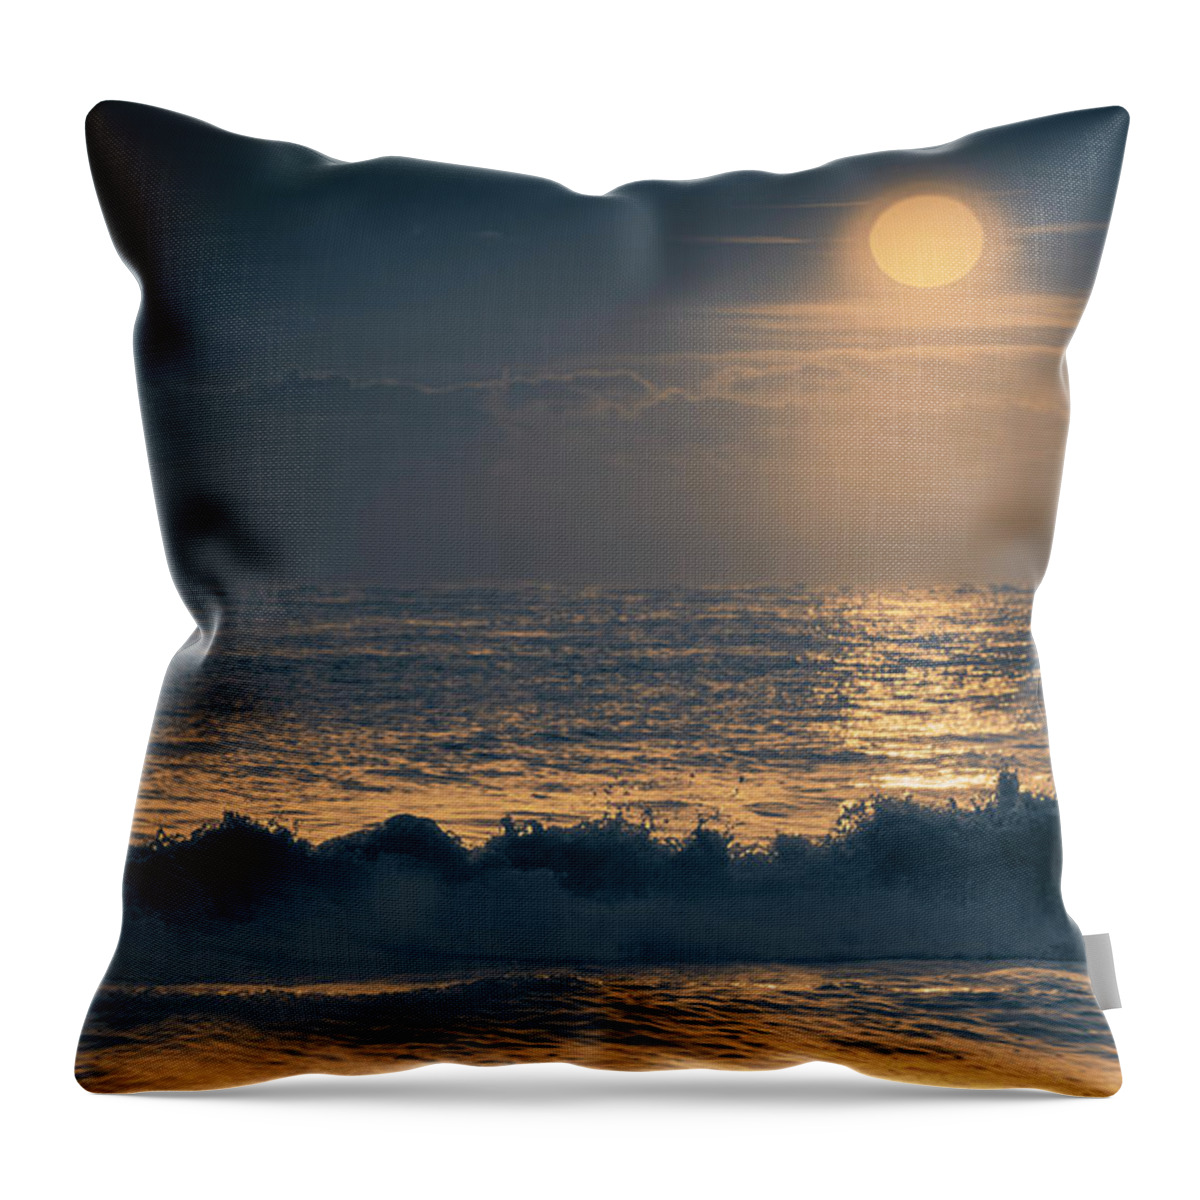 Top Artist Throw Pillow featuring the photograph 4143 Delray Beach Atlantic Ocean by Amyn Nasser Neptune Gallery